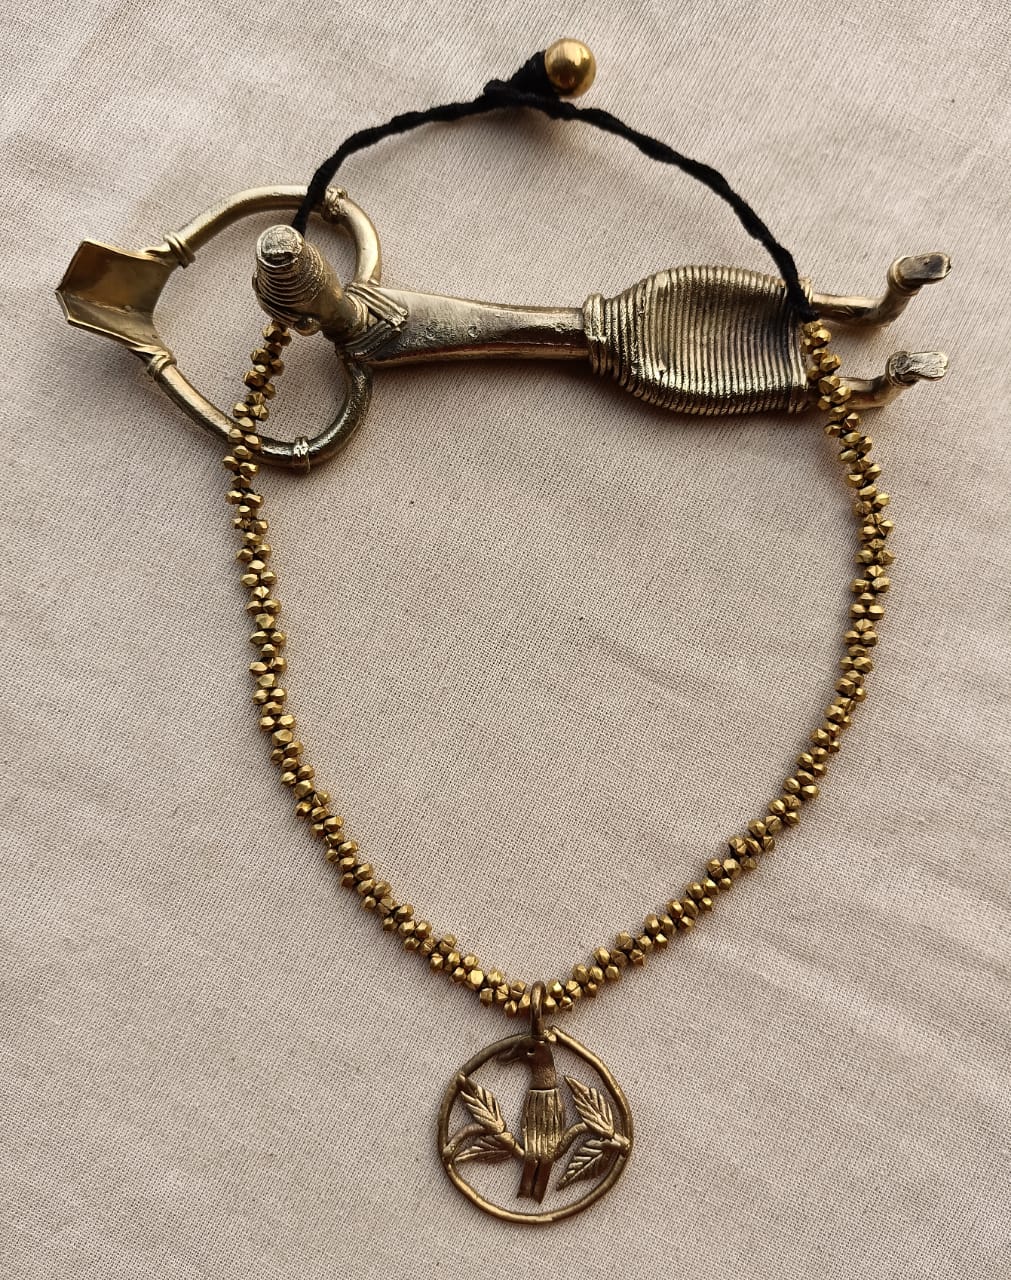 Dokra Necklace with Bird Pendant